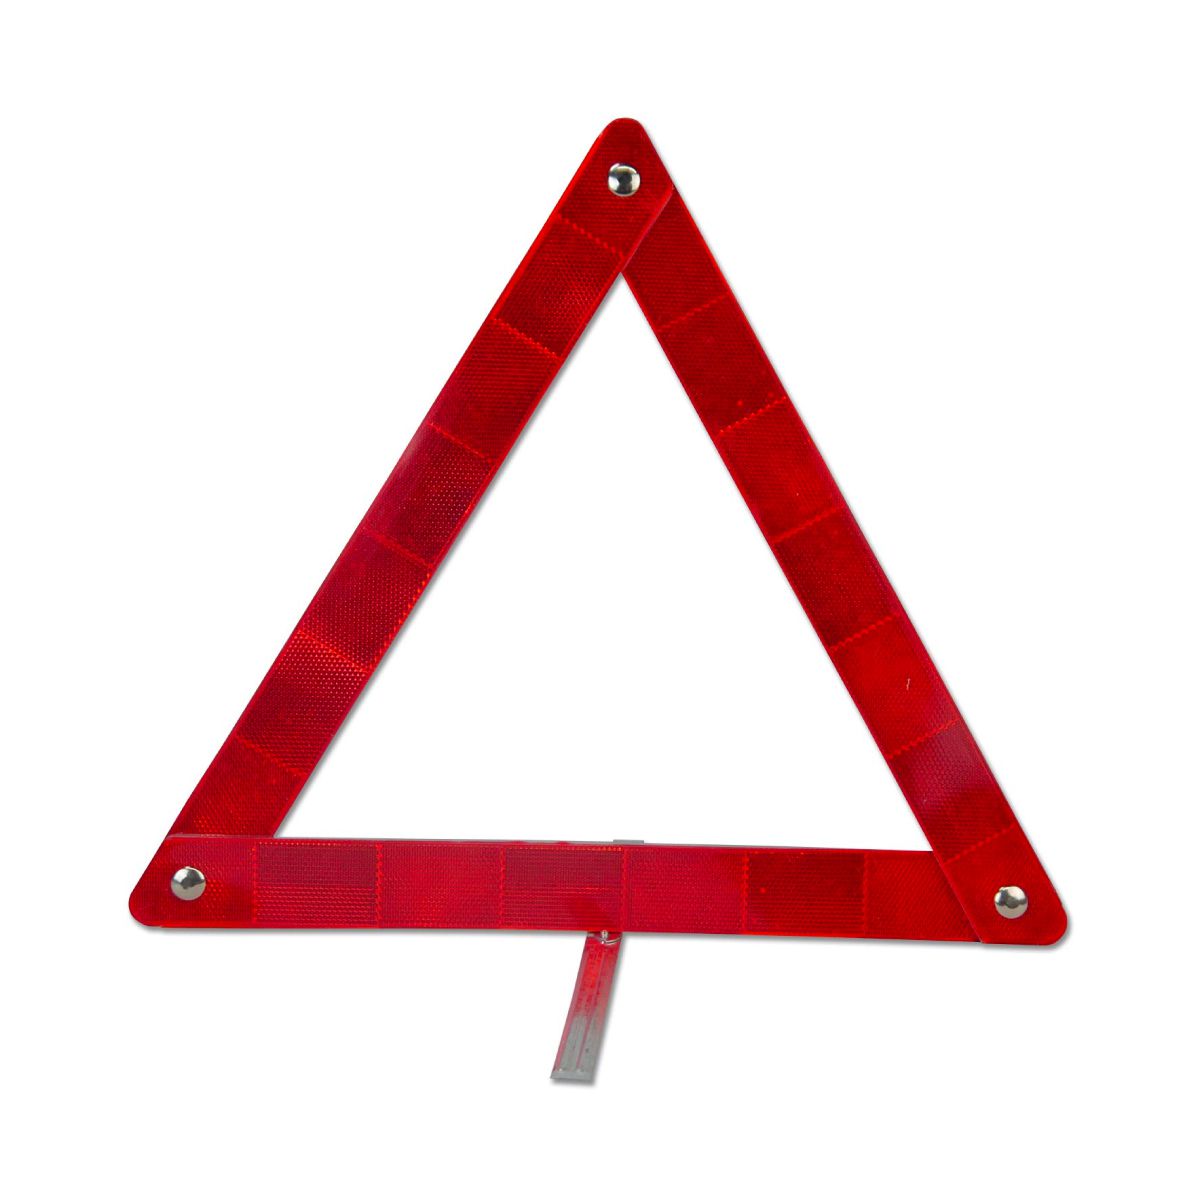 Kit de emergencia para coche: triángulos de emergencia, extintor